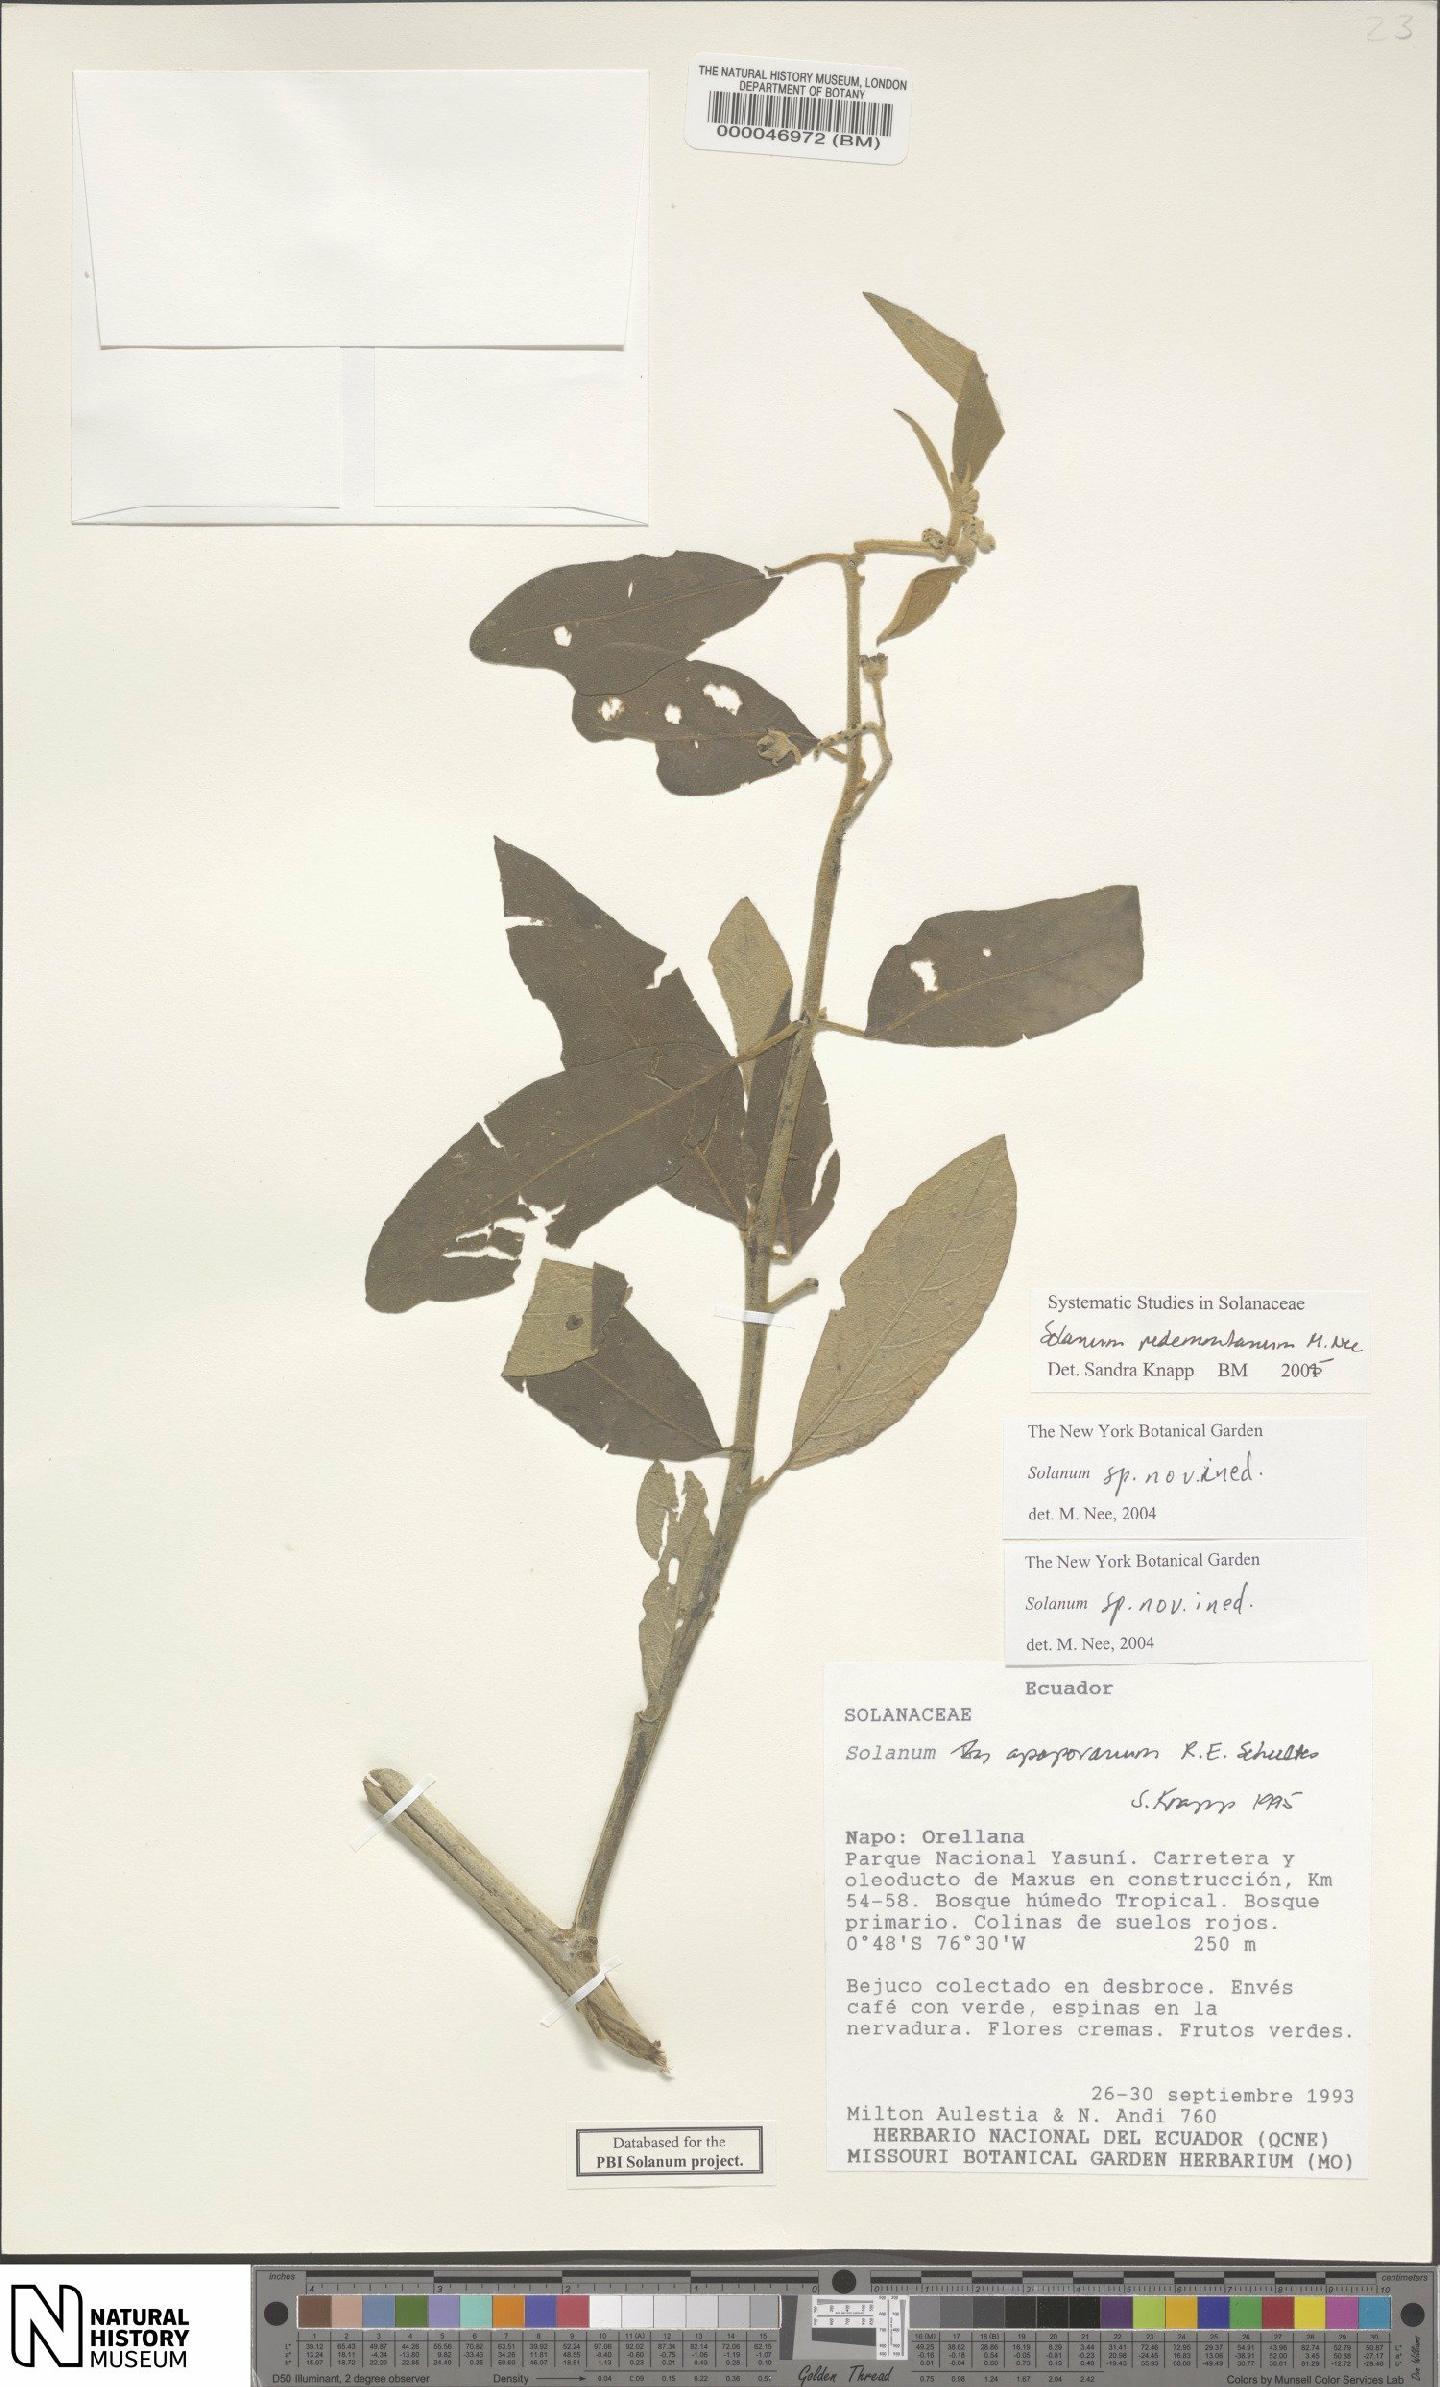 To NHMUK collection (Rubiaceae Juss.; NHMUK:ecatalogue:4609108)